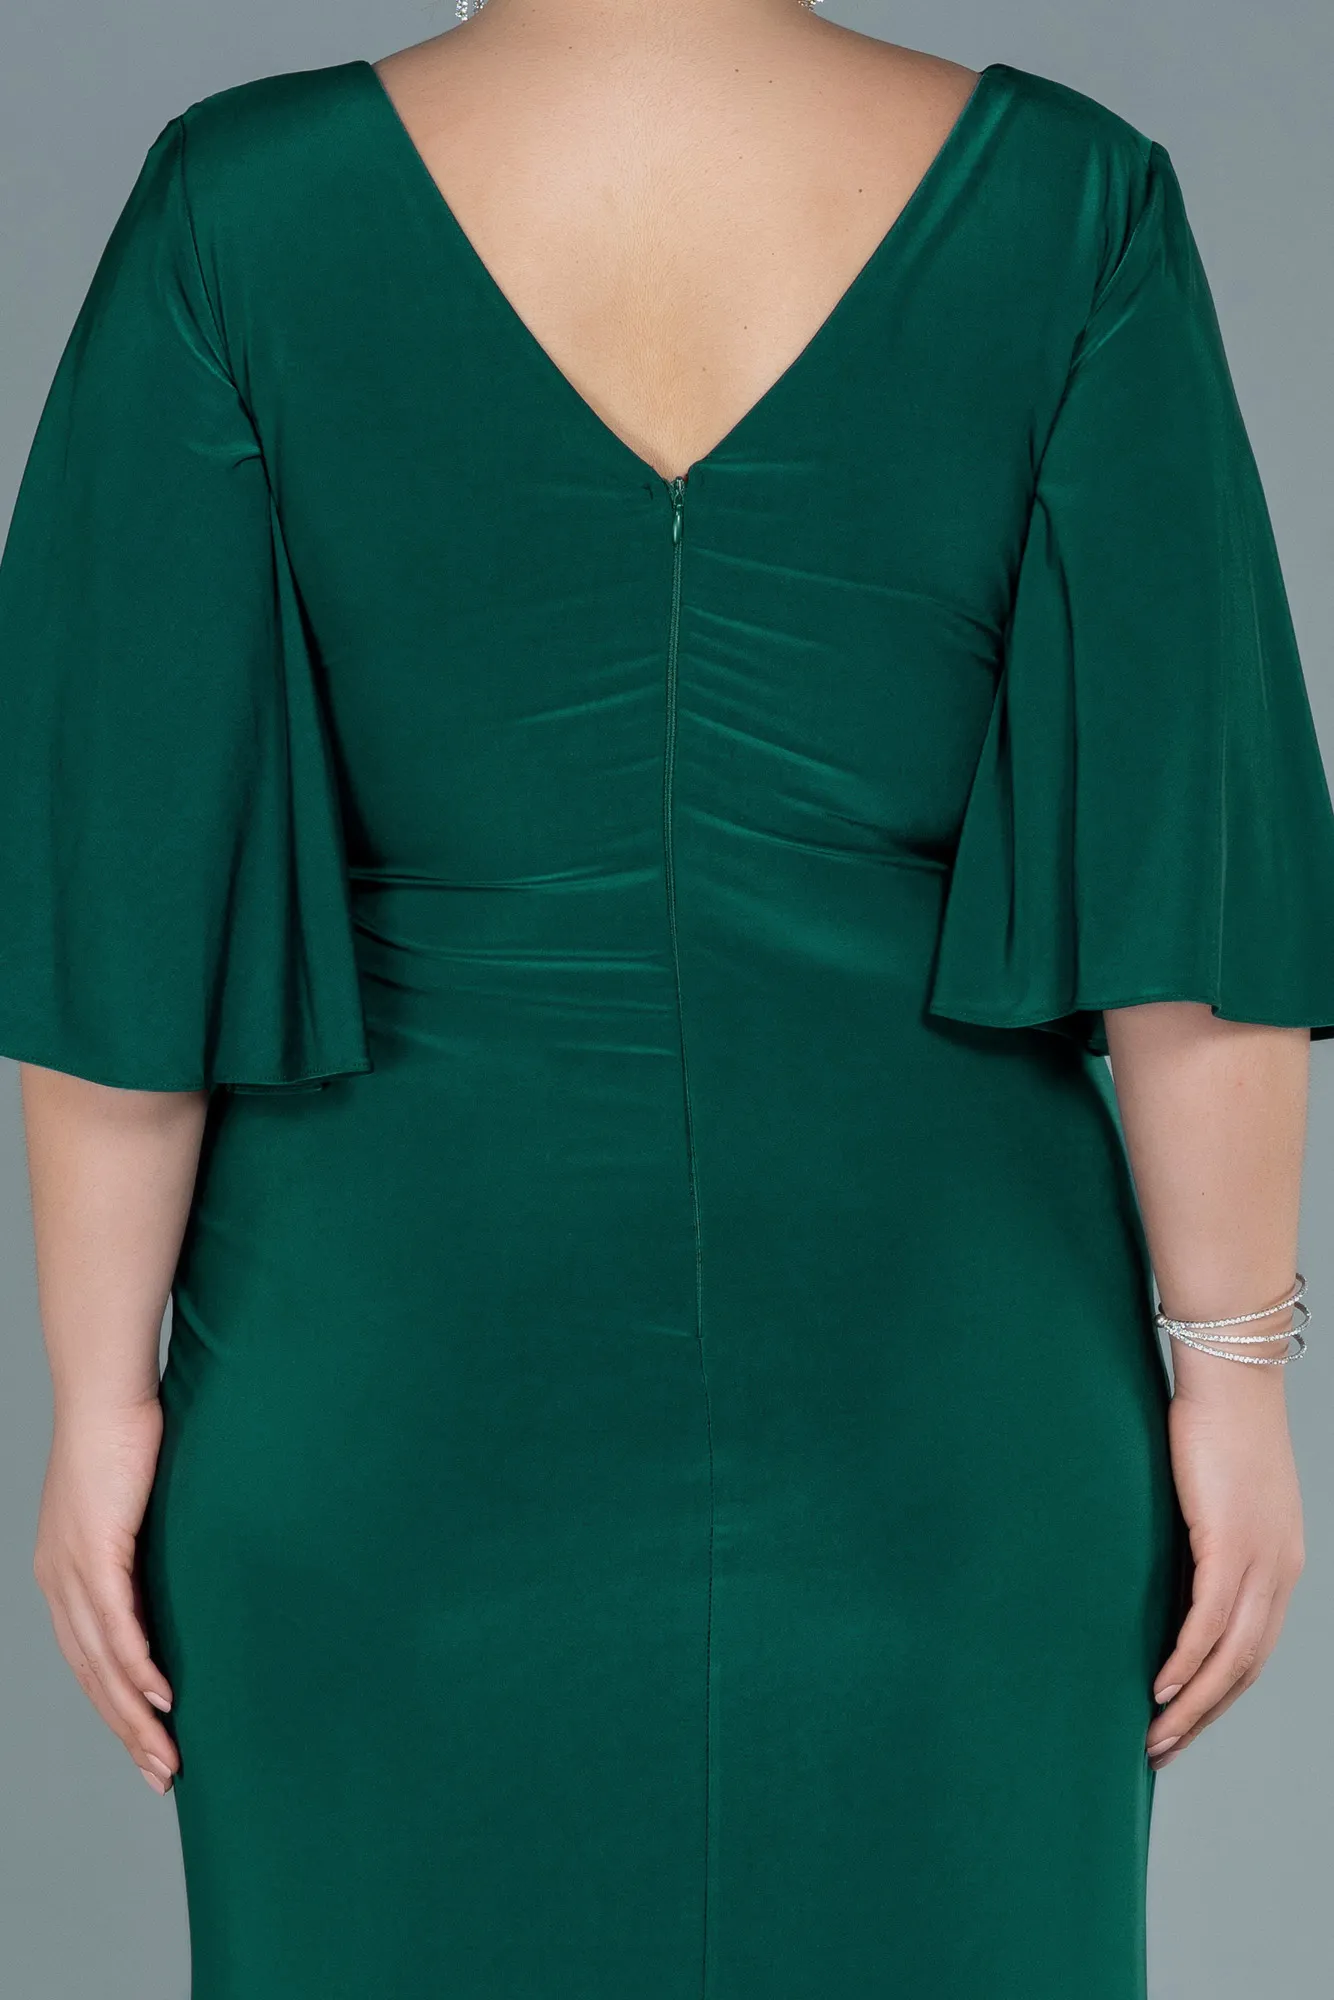 Emerald Green-Long Satin Plus Size Evening Dress ABU2646